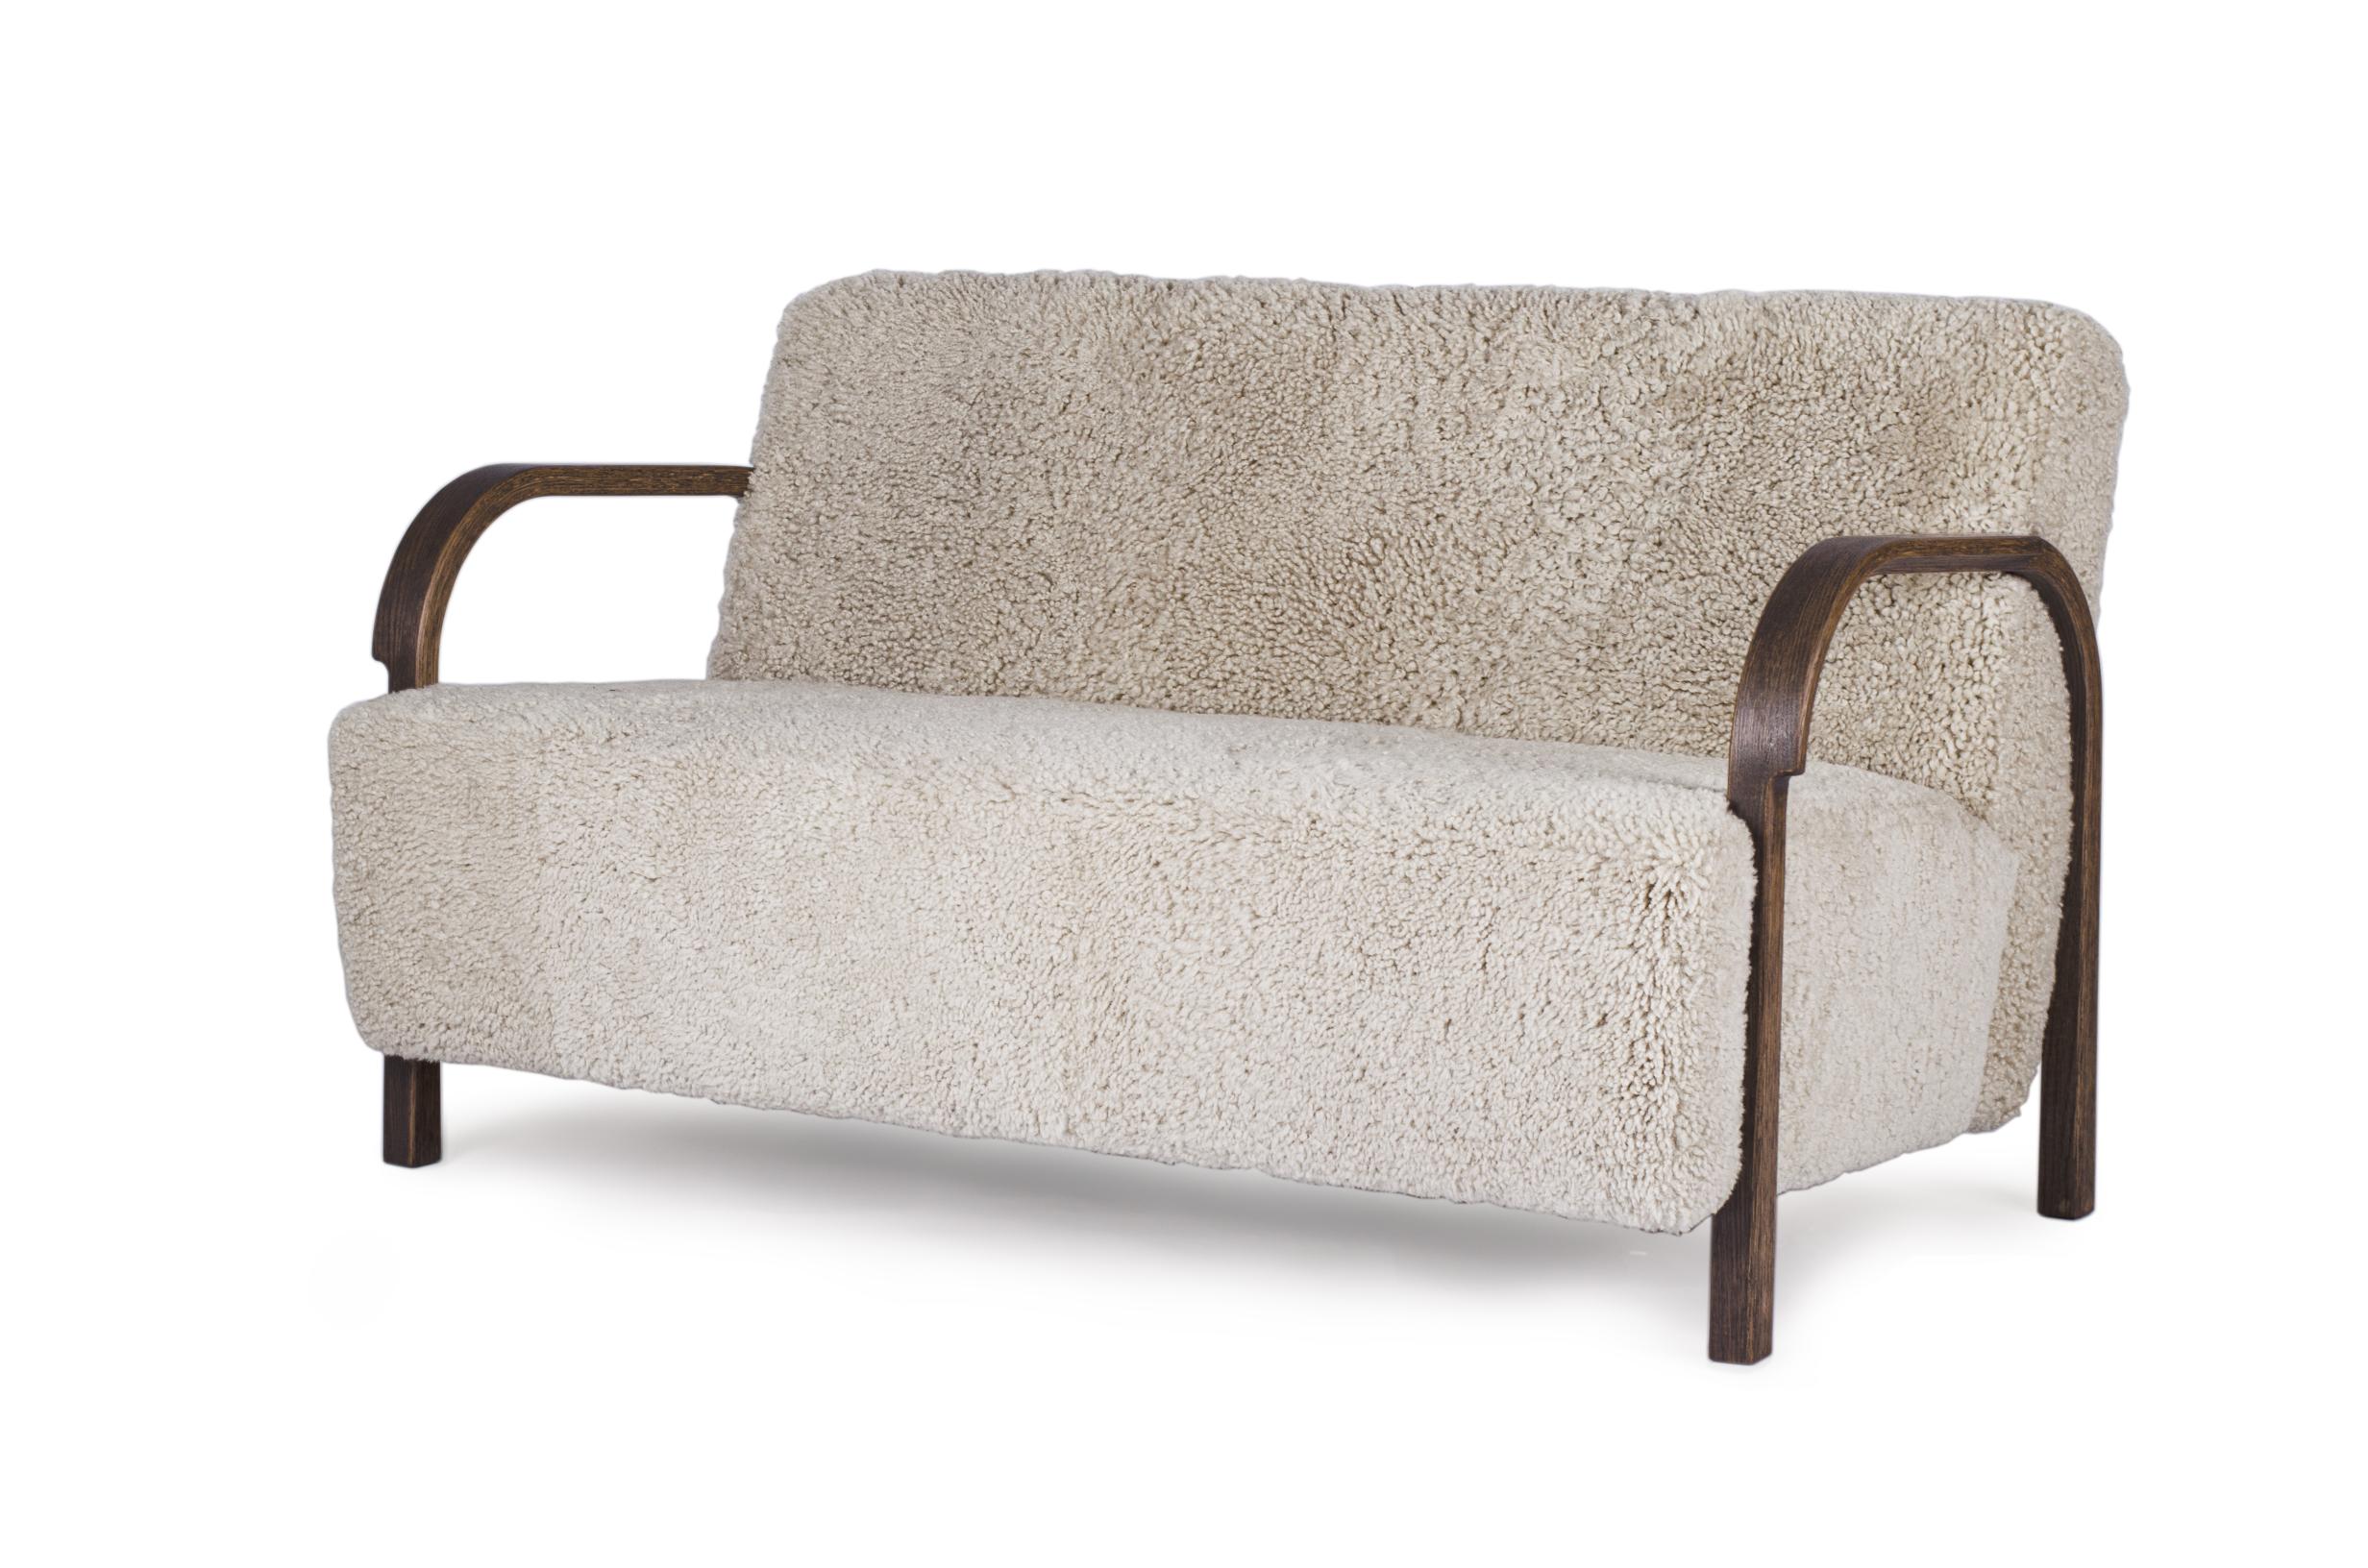 Moonlight Sheepskin ARCH 2 Seater Sofa by Mazo Design
Dimensions: W 128 x D 79 x H 76 cm
Materials: Oak, Sheepskin
Also Available: 2 Seater Configuration, ROMO/Linara, DAW/Royal, KVADRAT/Remix, KVADRAT/Hallingdal & Fiord, BUTE/Storr,